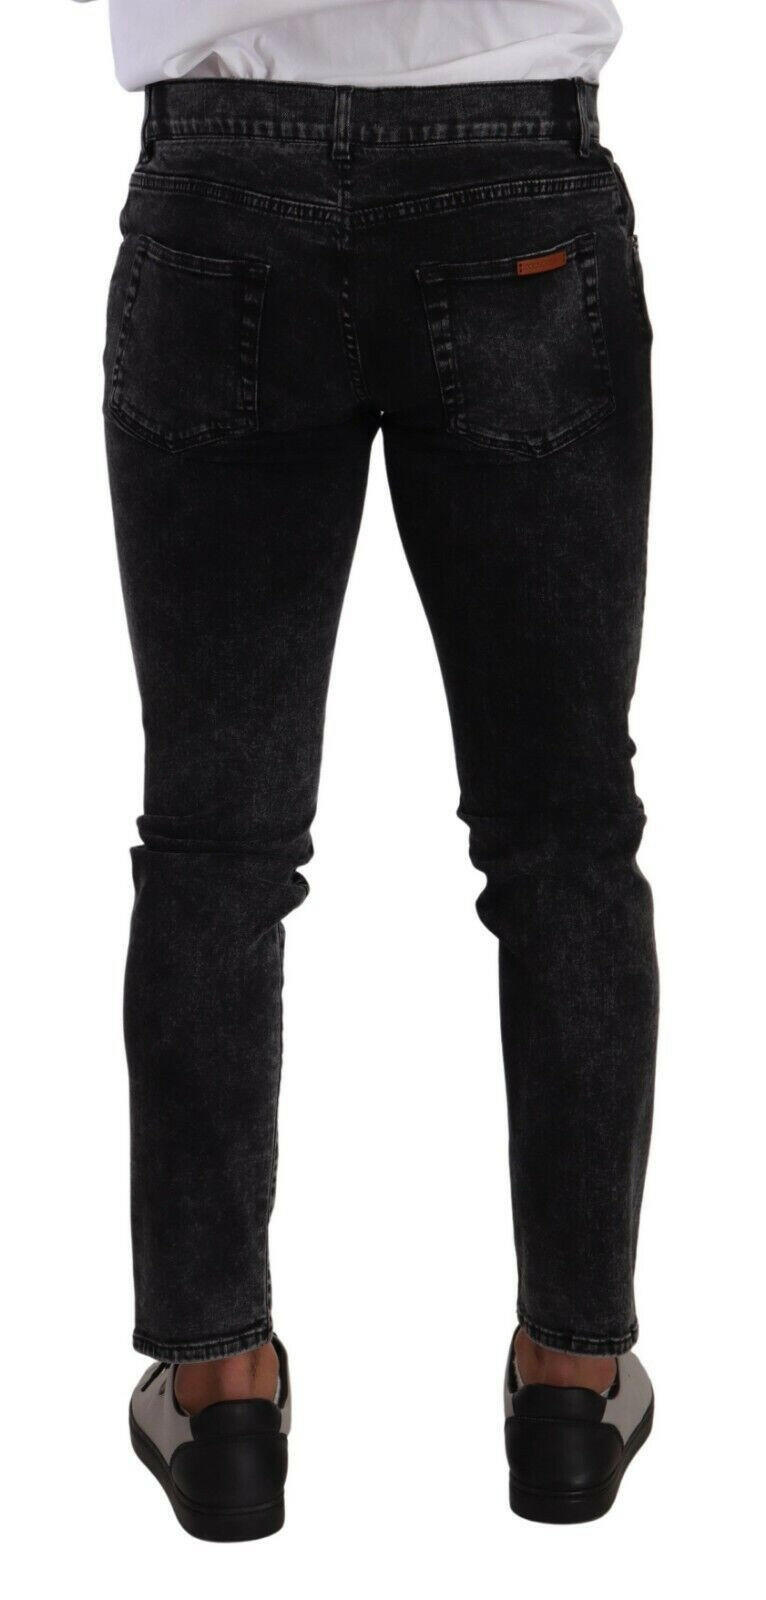 Dolce & Gabbana Black Cotton Stretch Skinny Denim Trouser Jeans - GENUINE AUTHENTIC BRAND LLC  